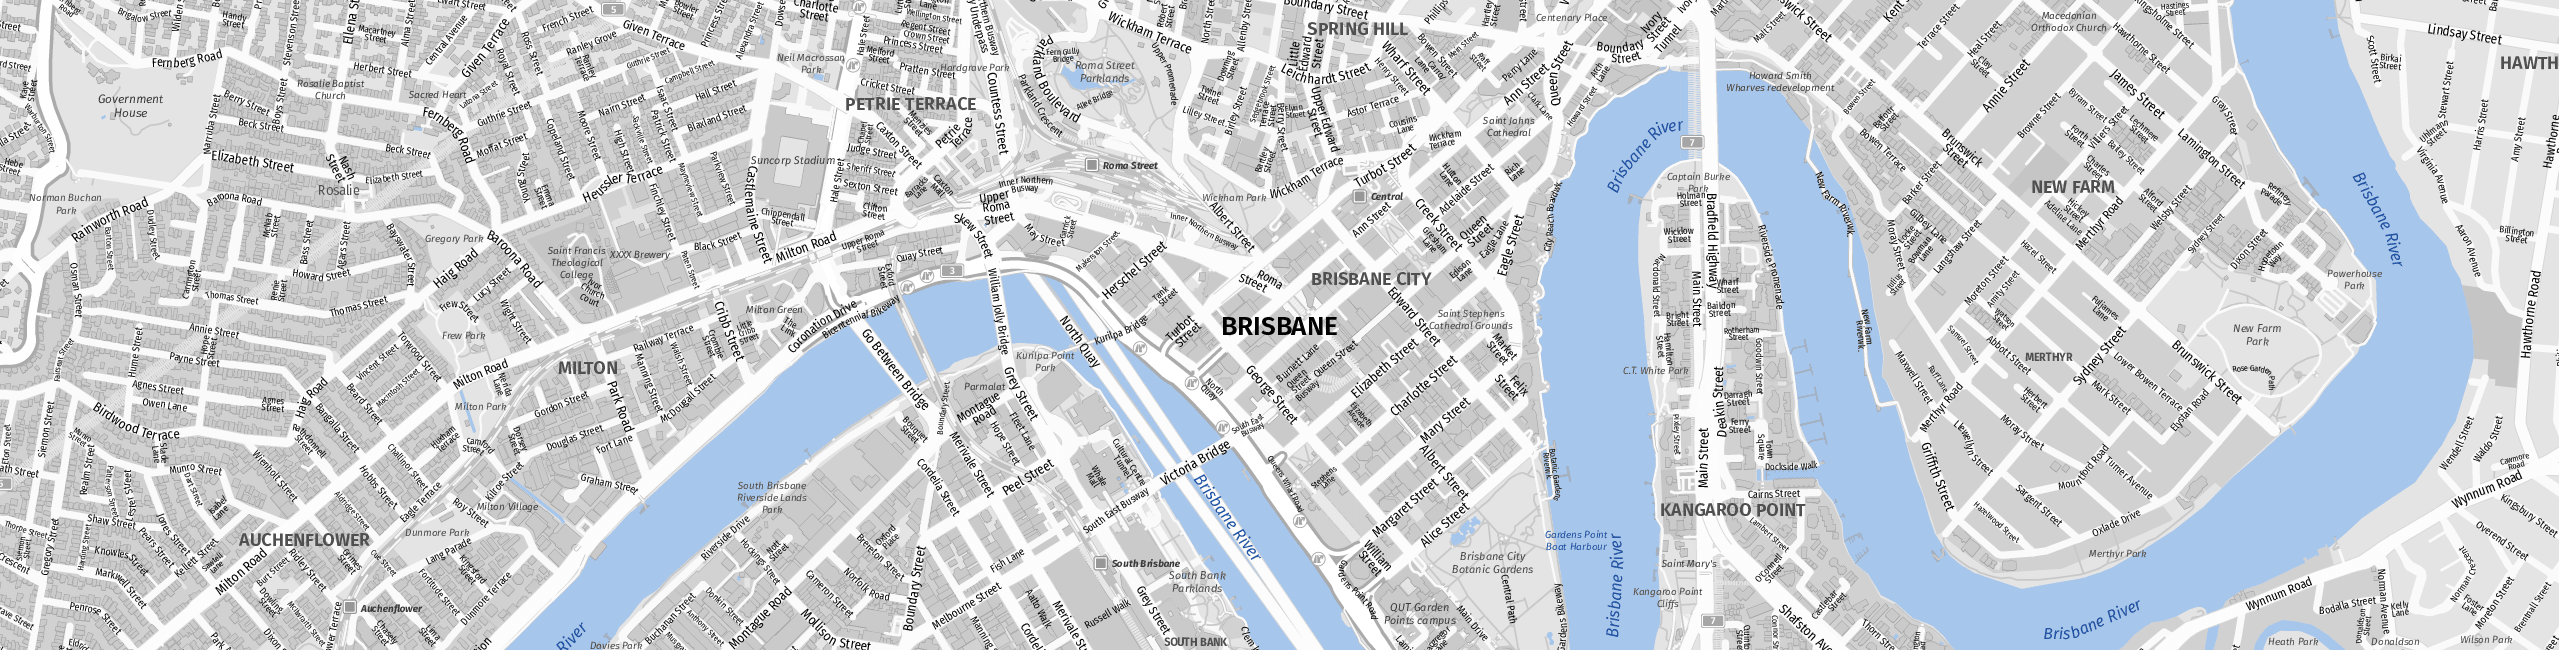 Stadtplan Brisbane zum Downloaden.